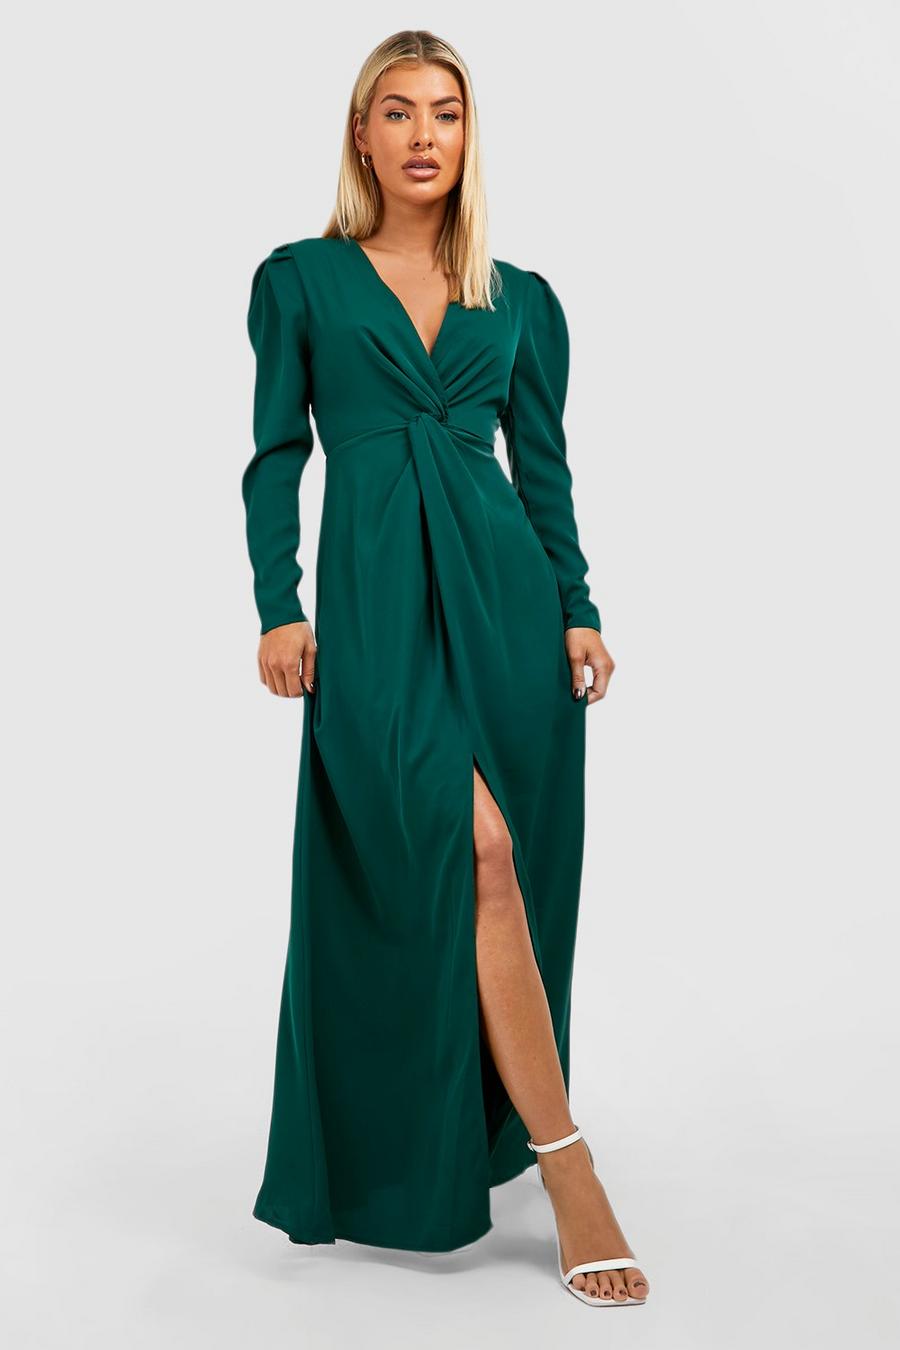 Robe de demoiselle d'honneur torsadée, Emerald green